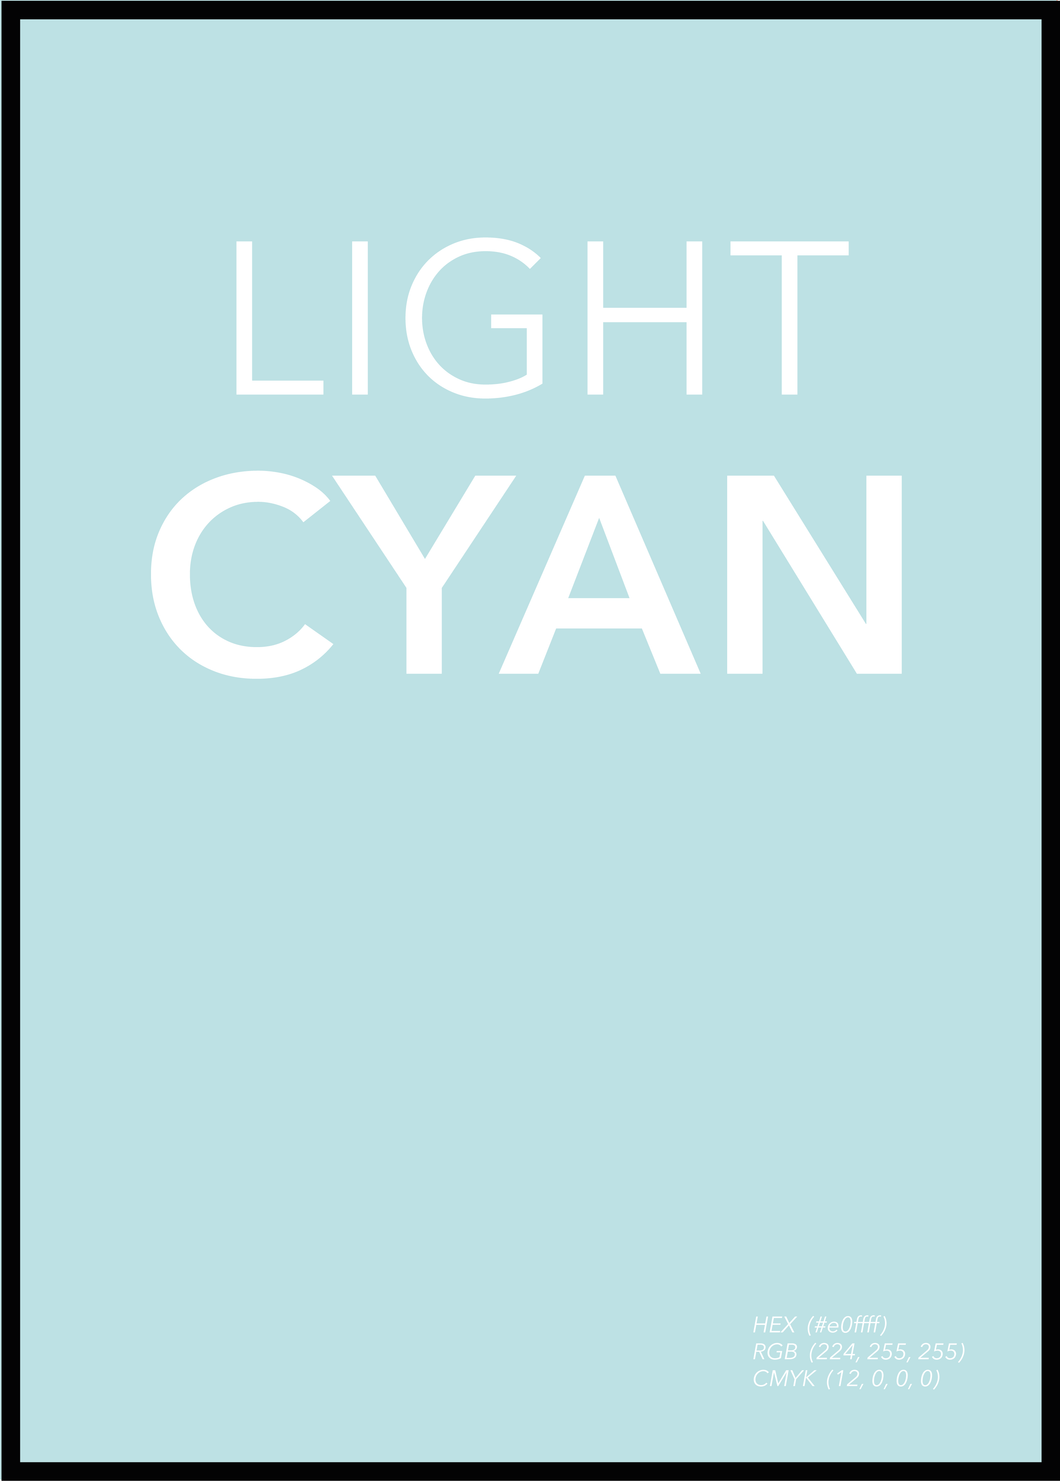 Light Cyan